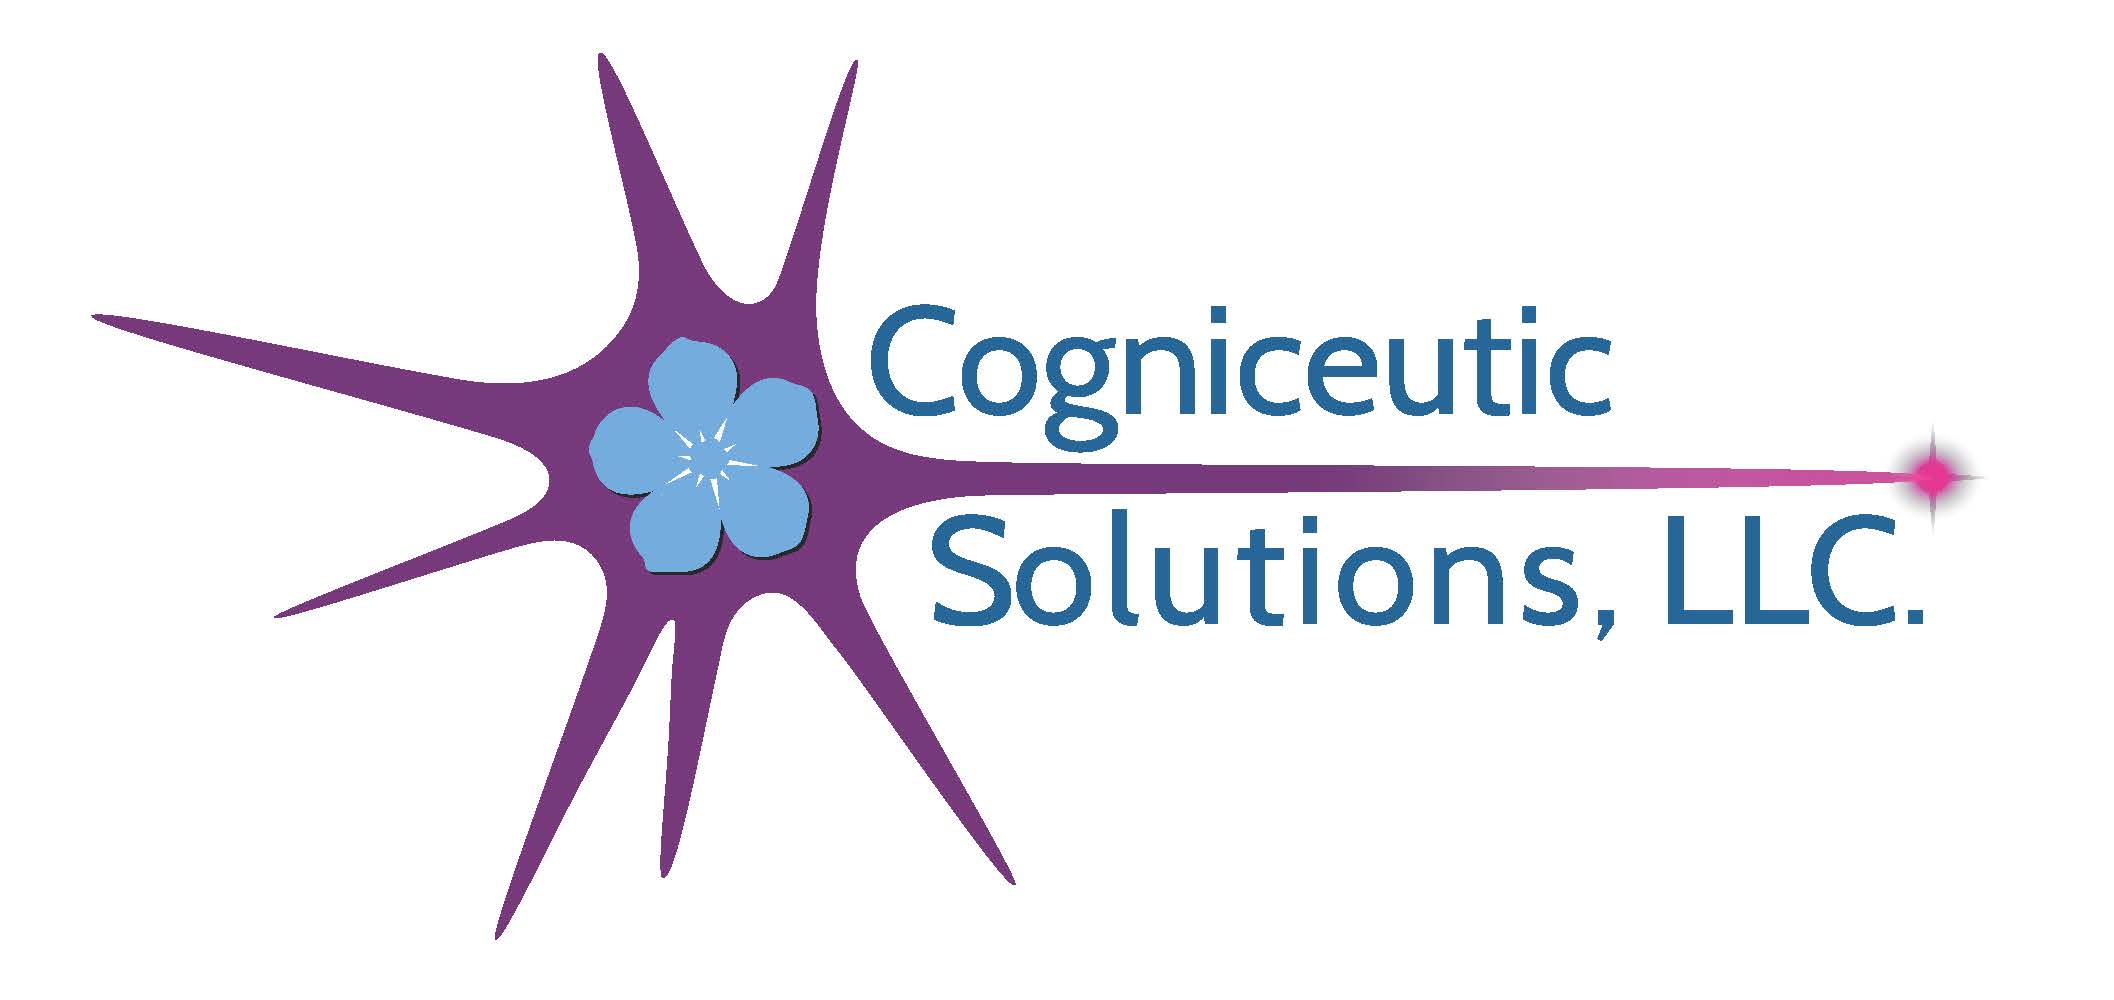 Cogniceuitic Solutions logo